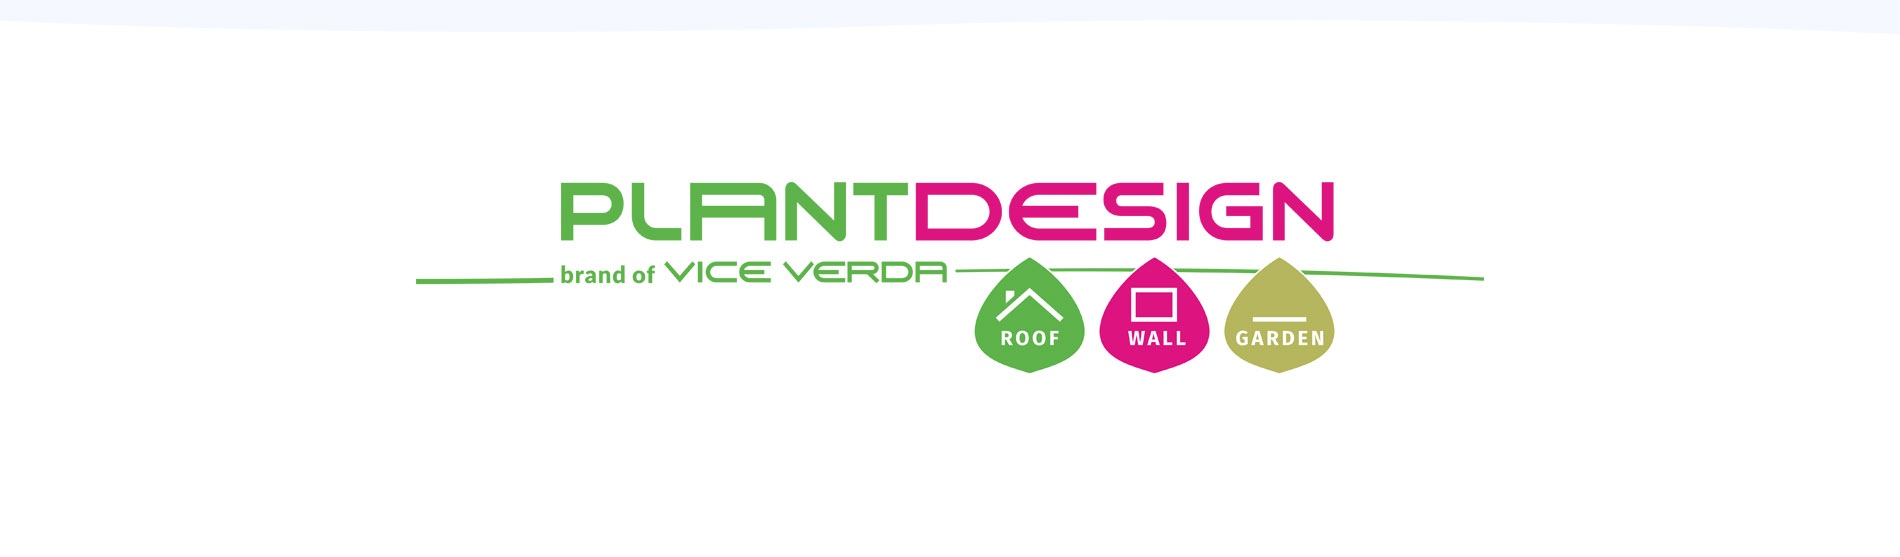 Vice Verda neemt Plant Design over